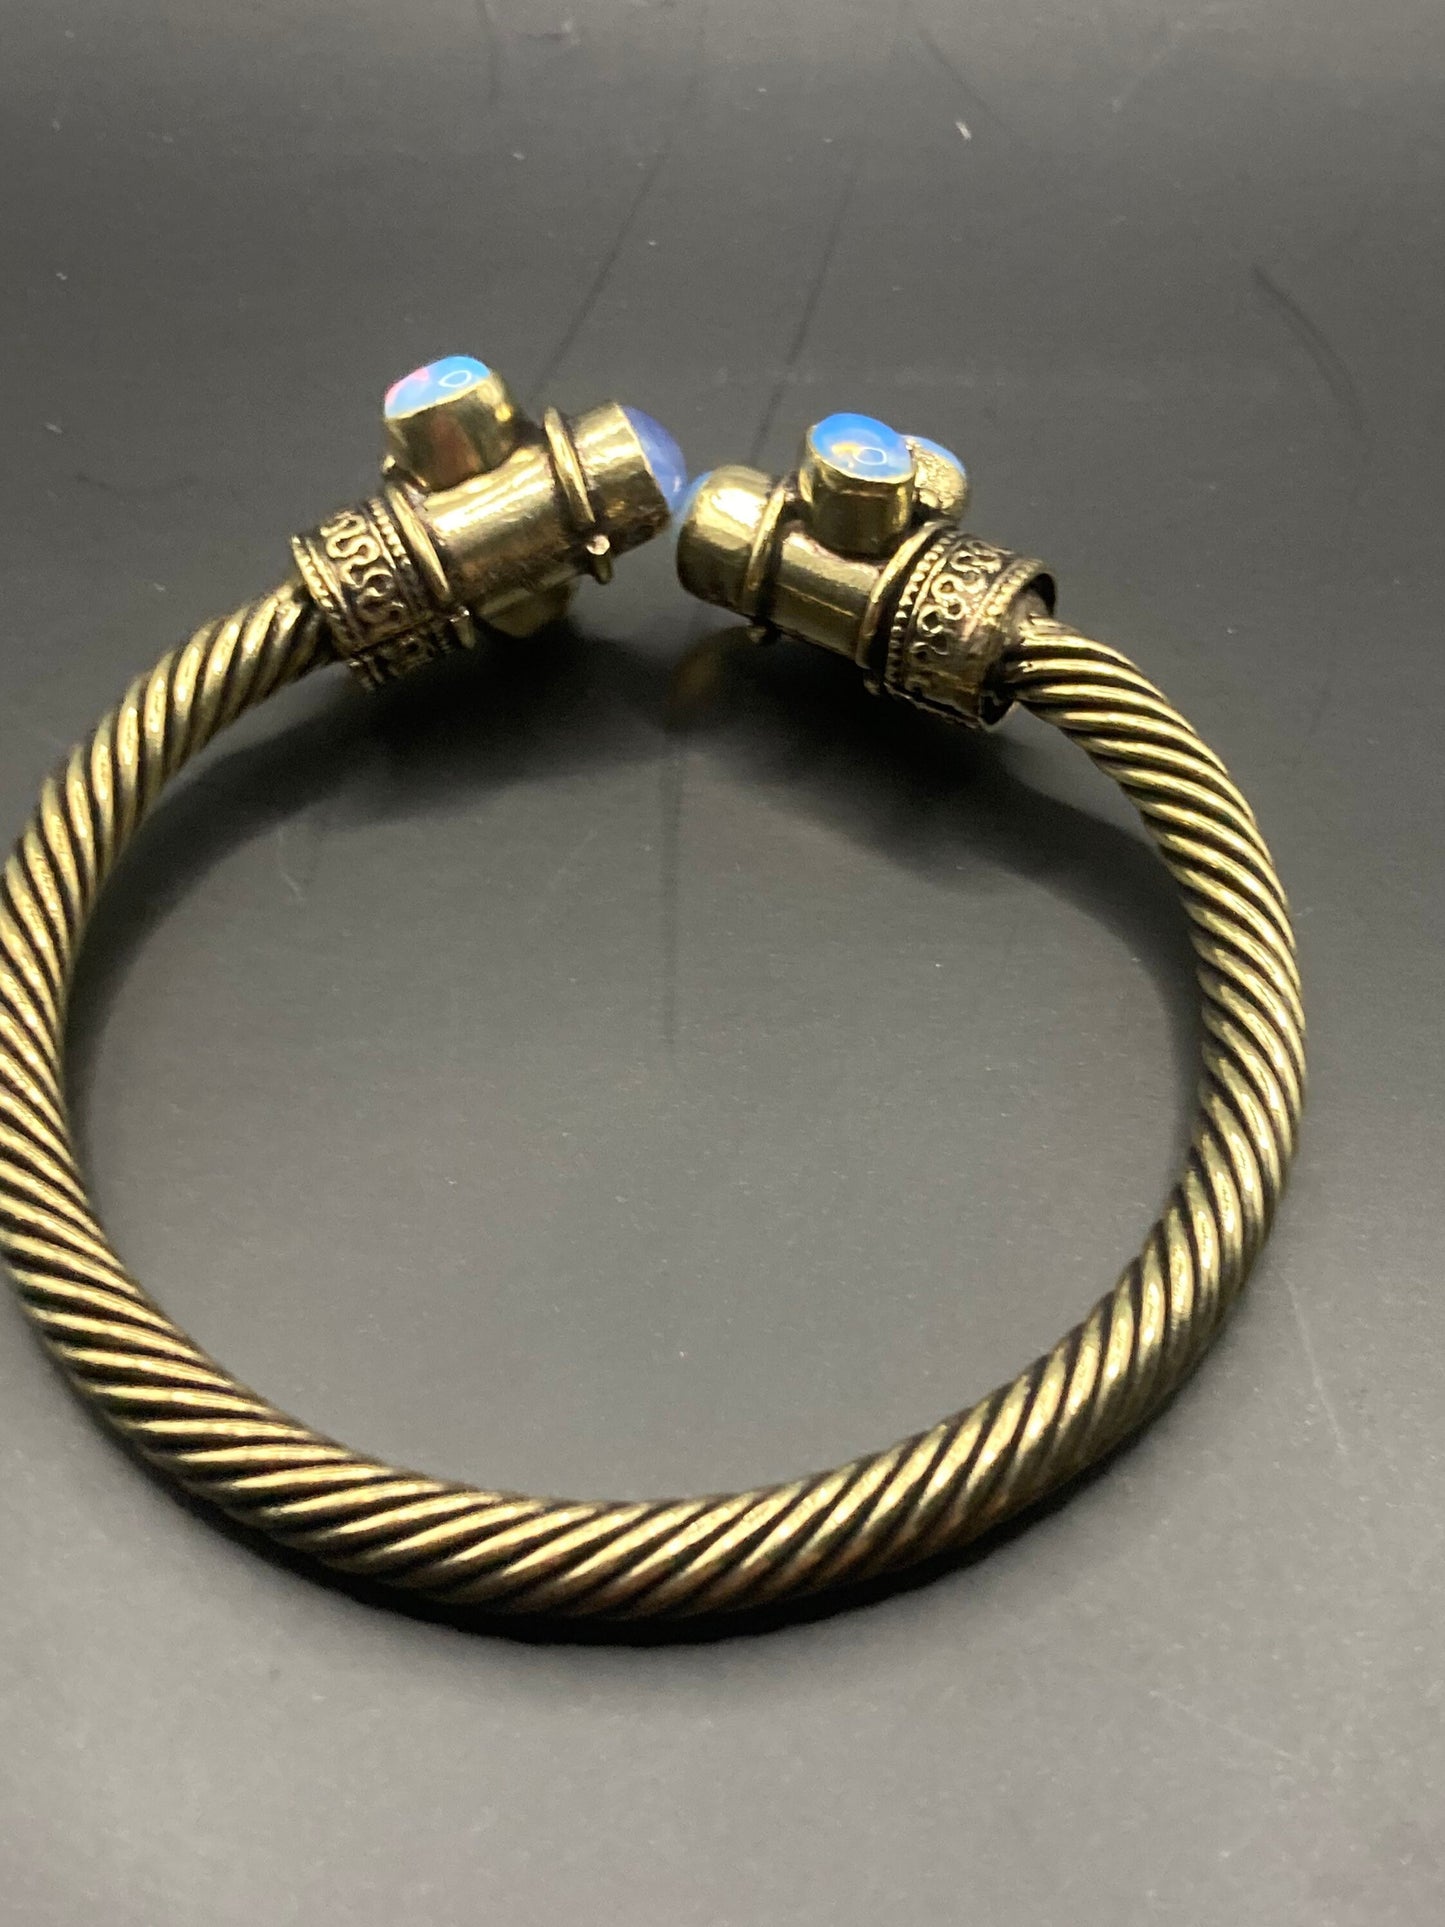 Moonstone labrodorite GEMSTONE Bangle brass gold tone cuff bracelet